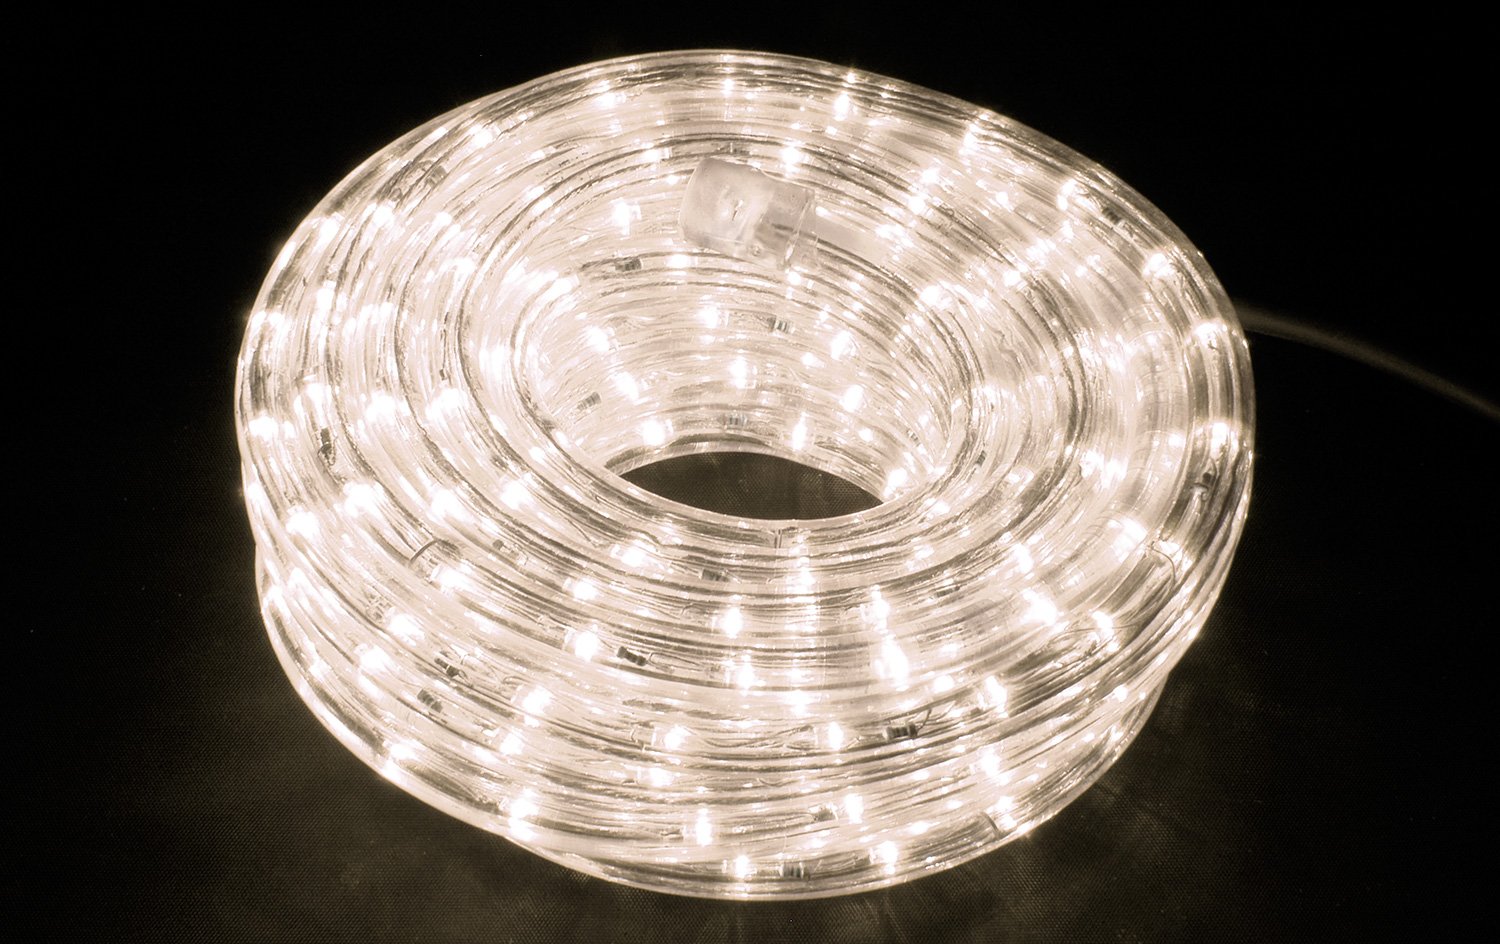 LED Rope Light - 50m LED Rope Light Warm White (2800-3300K) 50m